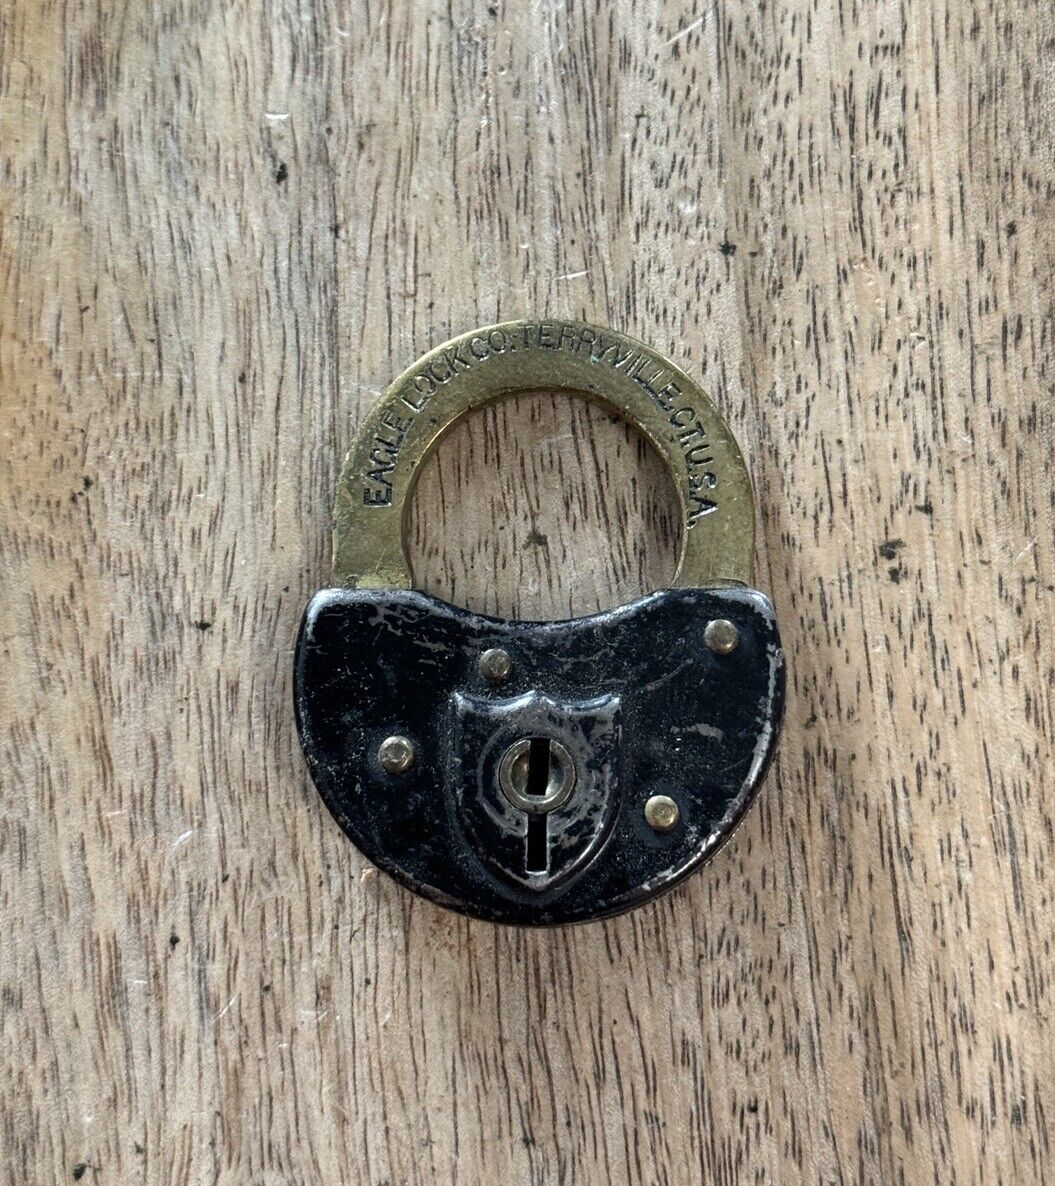 Vintage Old Eagle Padlock No Key Lock